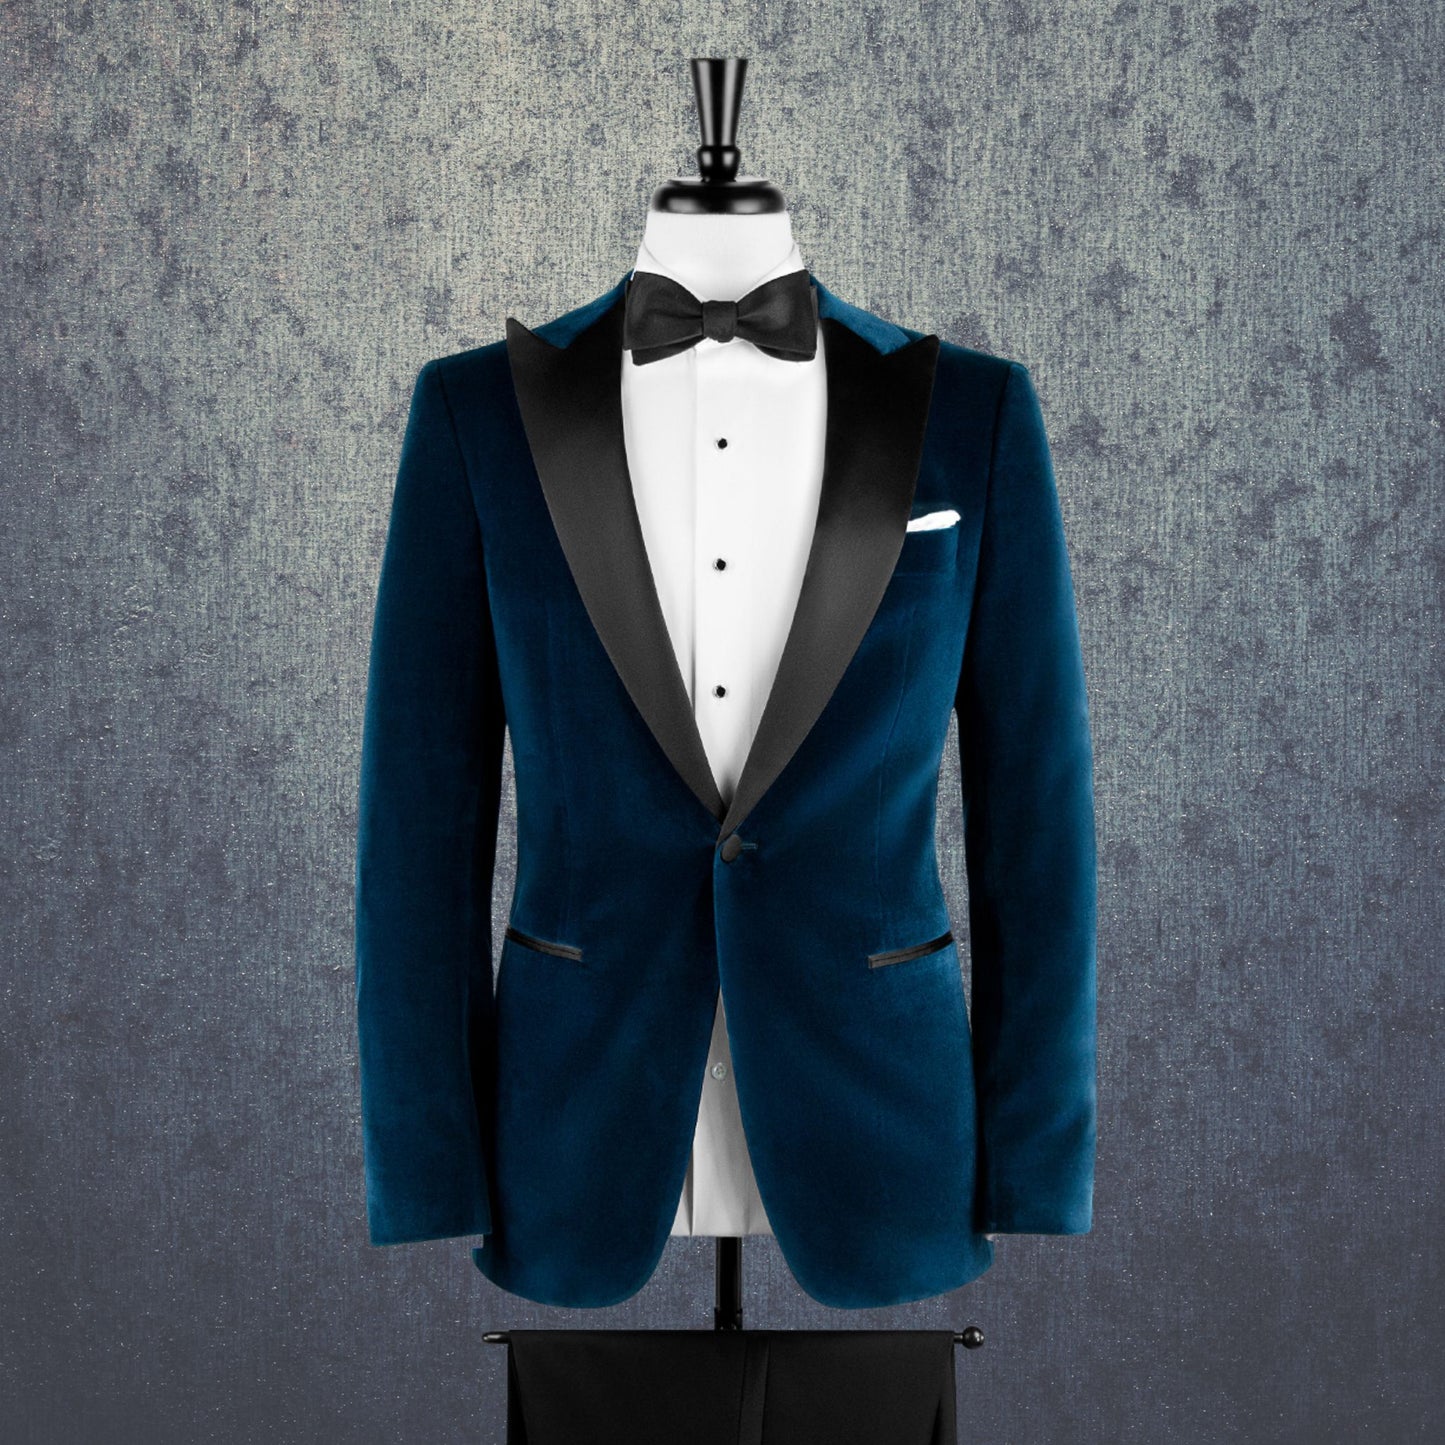 Black tie set - modrý sametový smoking